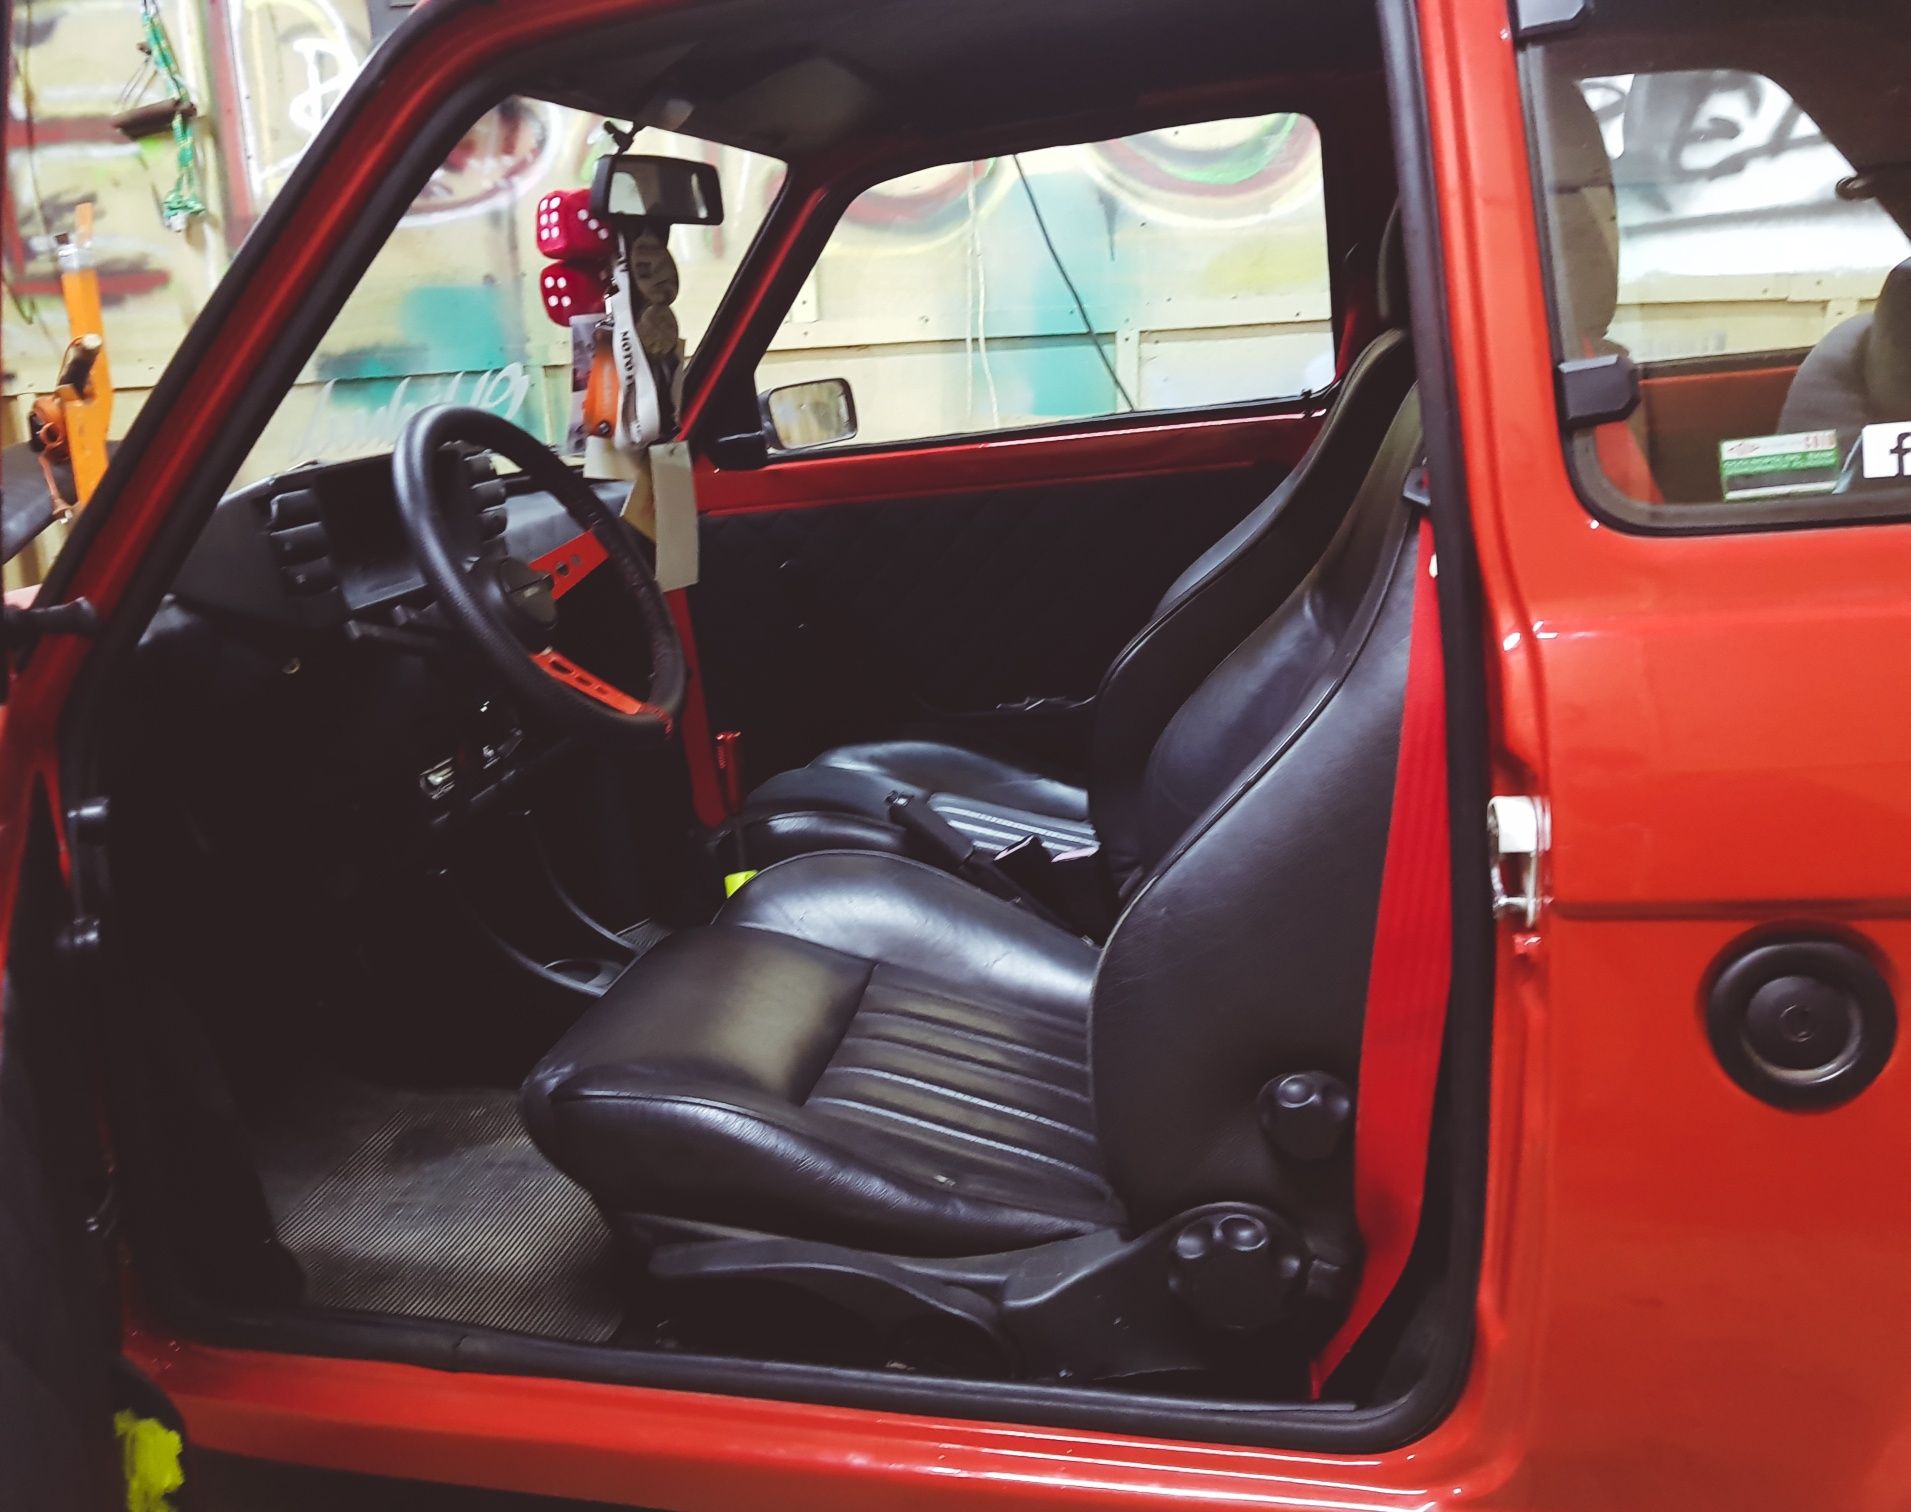 Fiat 126p tuning / maluch